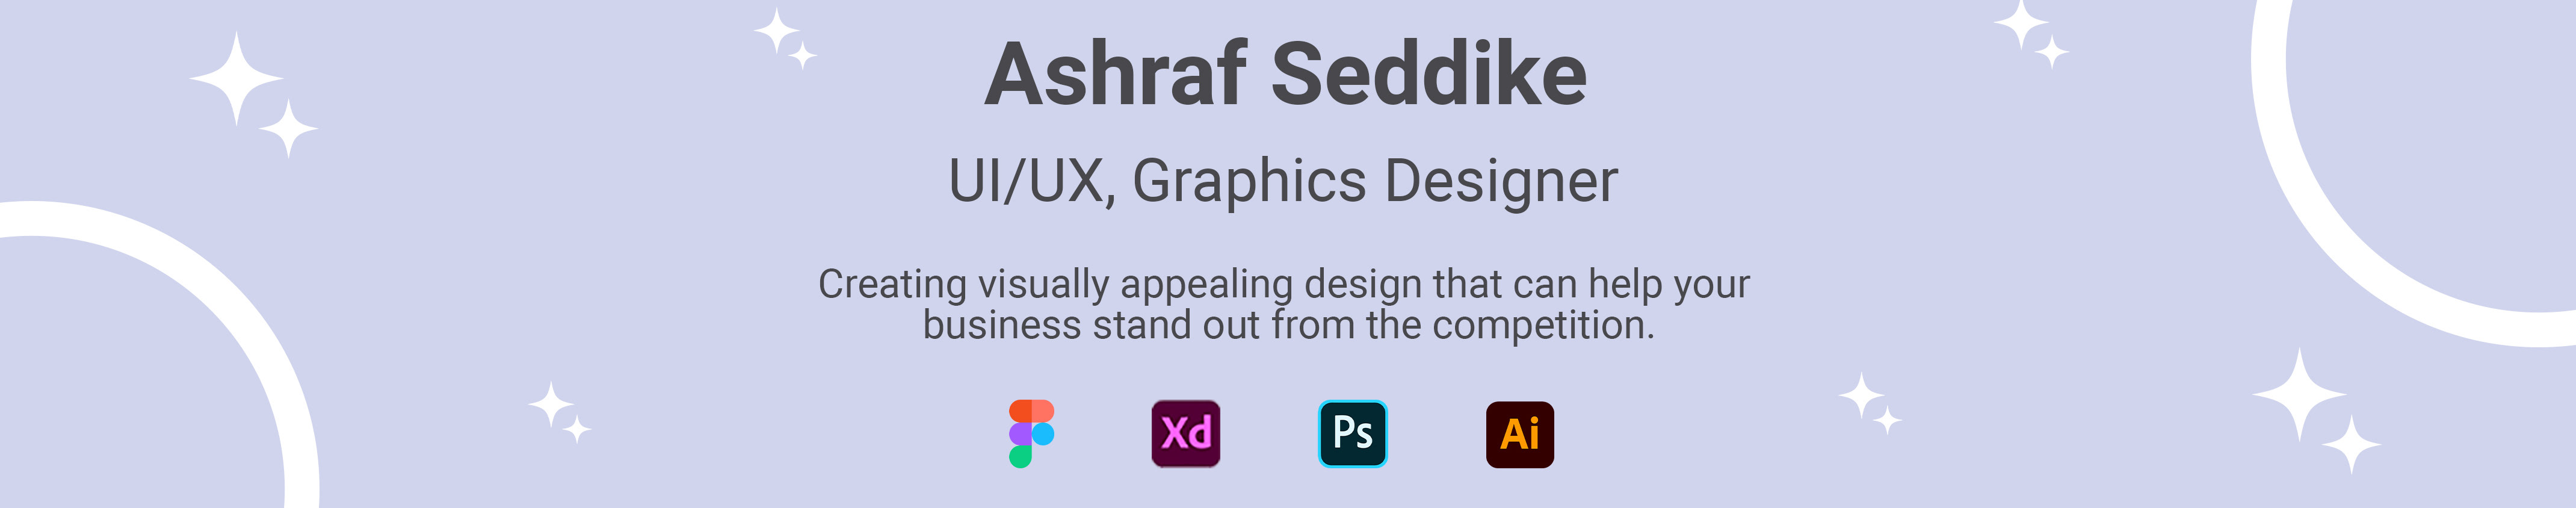 ashraf Seddike's profile banner